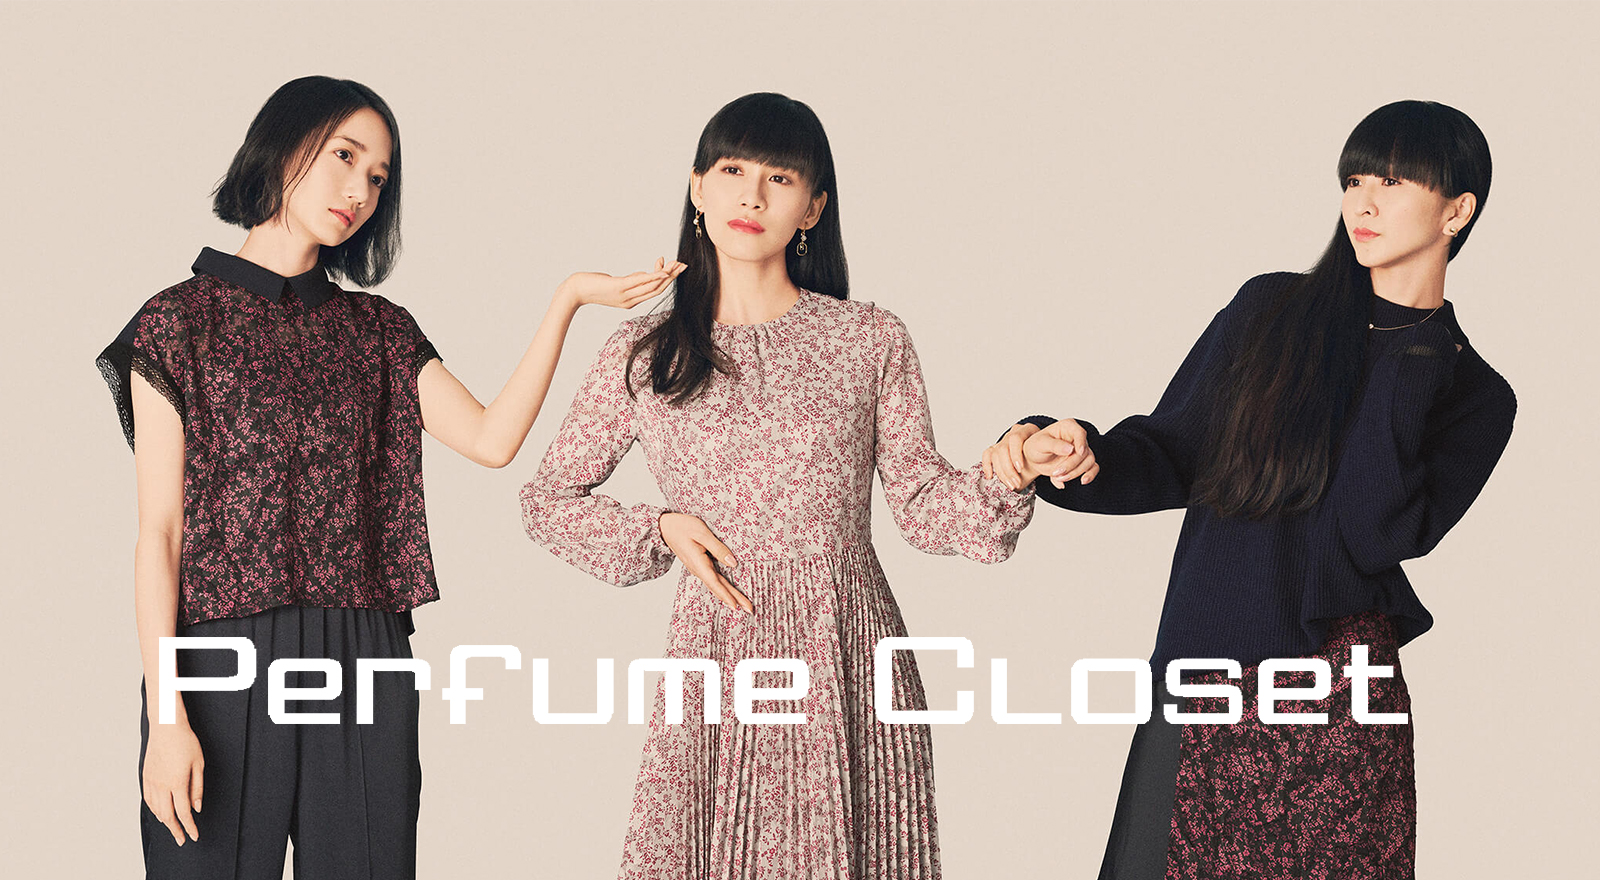 「Perfume Closet」第4弾【Phase2】の詳細発表！
期間限定ポップアップショップや各店舗の入場方法・購入制限等に関してもこちらでチェック。